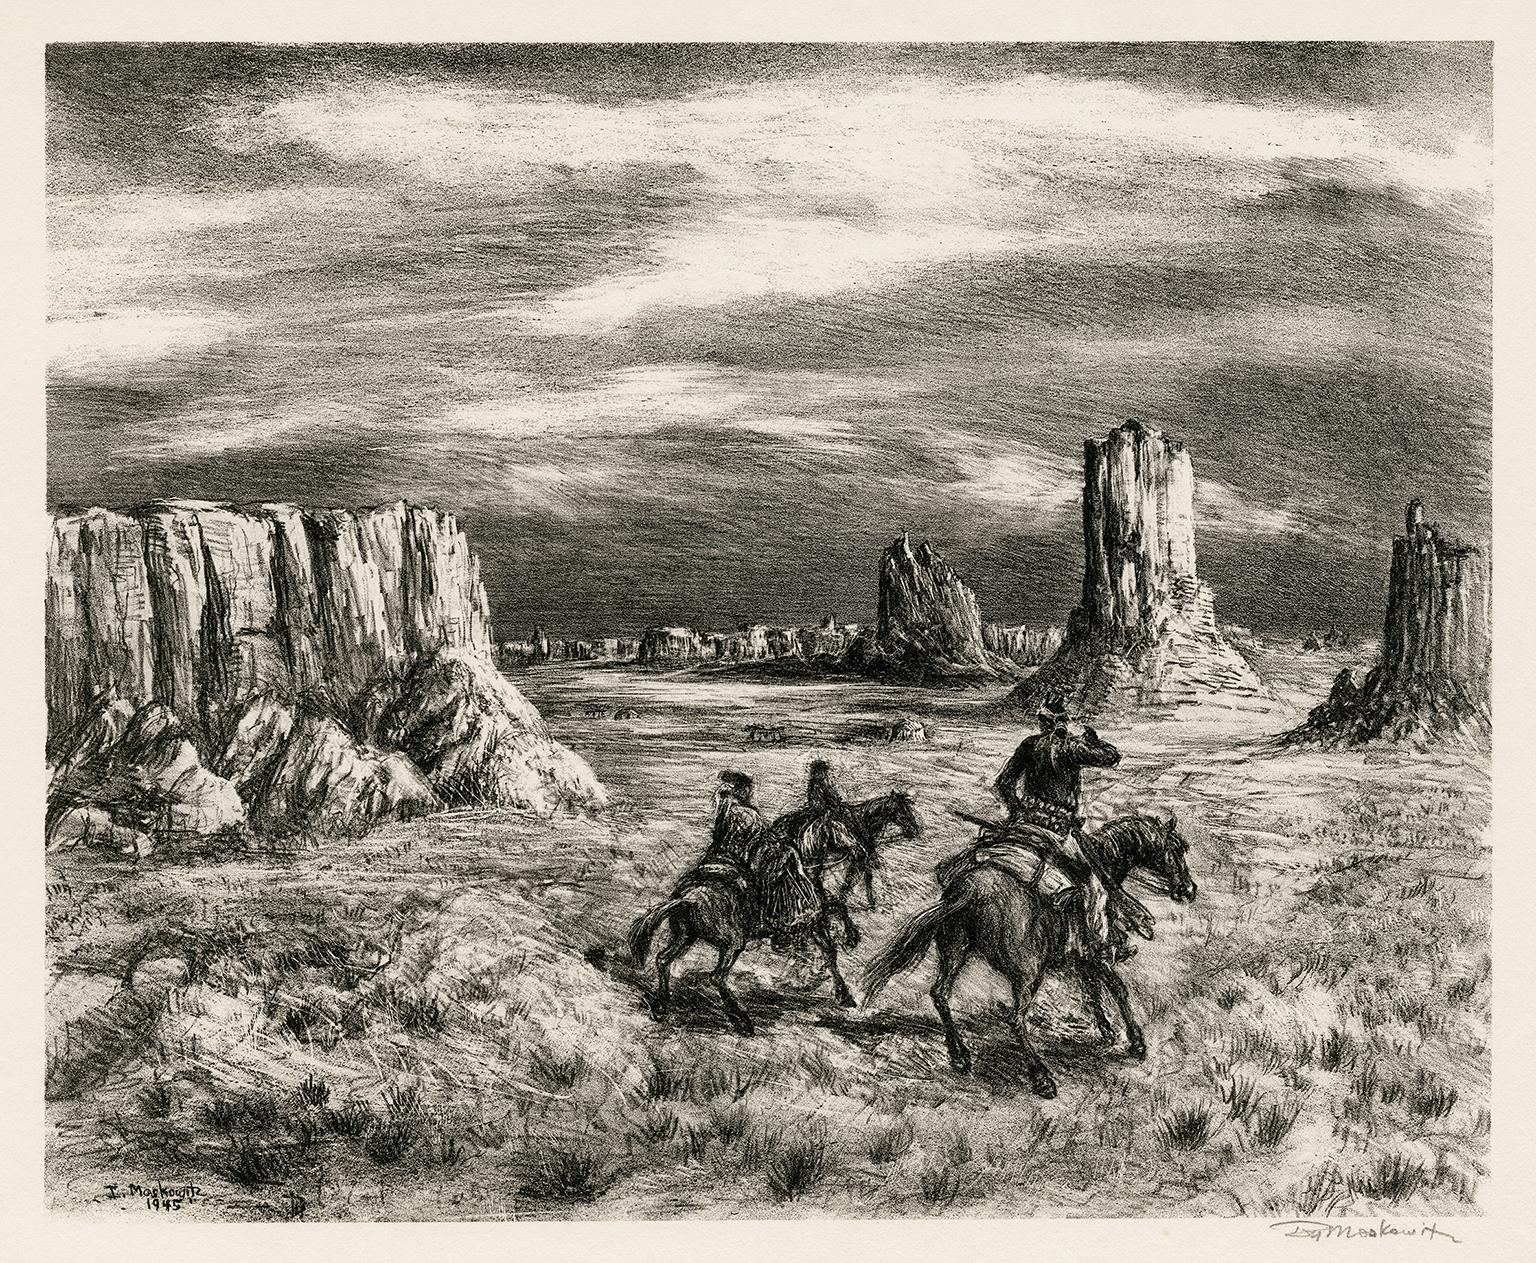 Ira Moskowitz Landscape Print - 'Navajo Reservation Landscape' — 1940s Southwest Regionalism